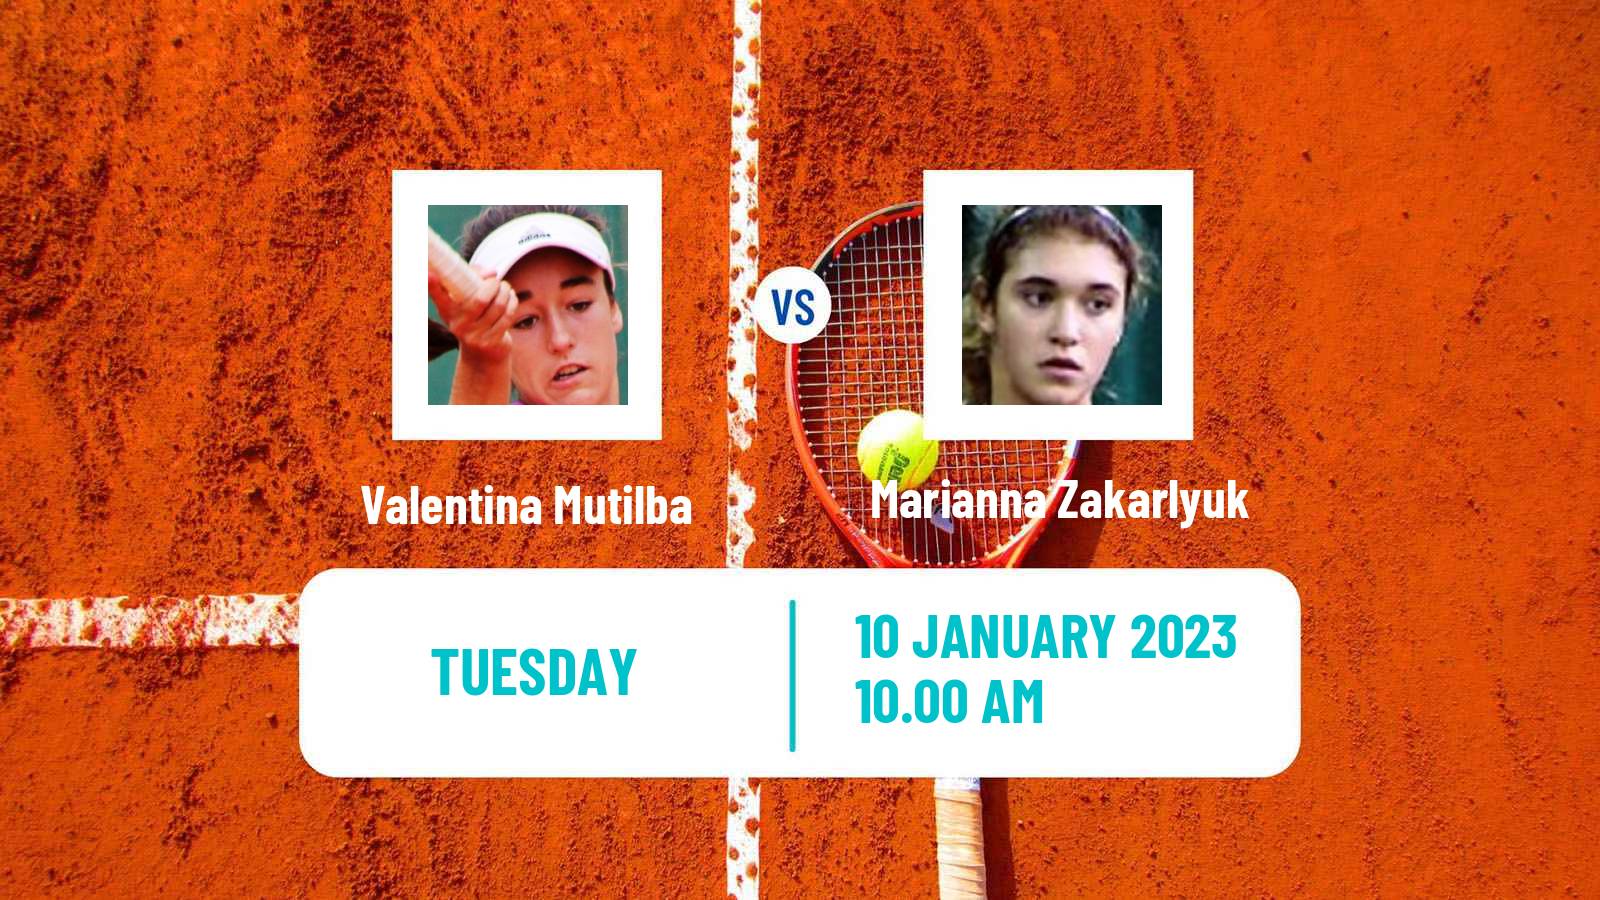 Tennis ITF Tournaments Valentina Mutilba - Marianna Zakarlyuk